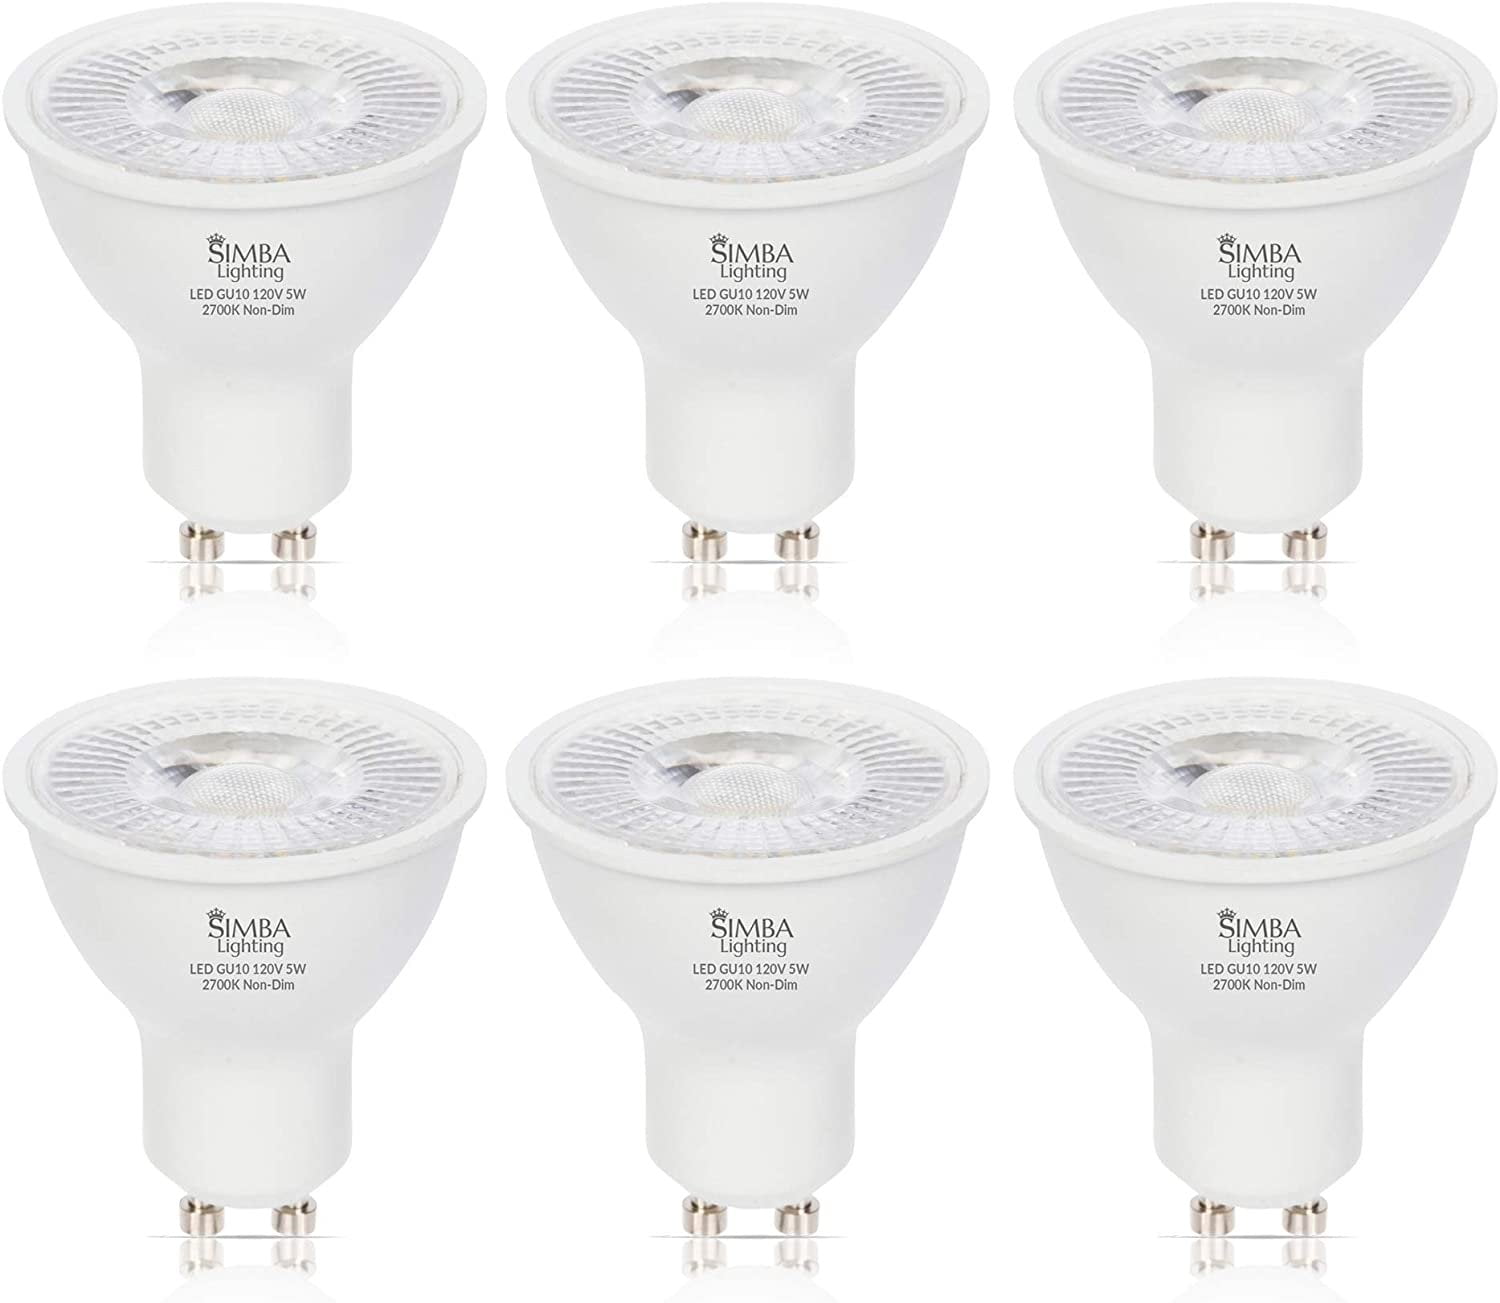 Simba Lighting LED 2700K Non-Dimmable Light 5W Bulb Replacement GU10 Base 50W 120V Twist 6-Pack Spot